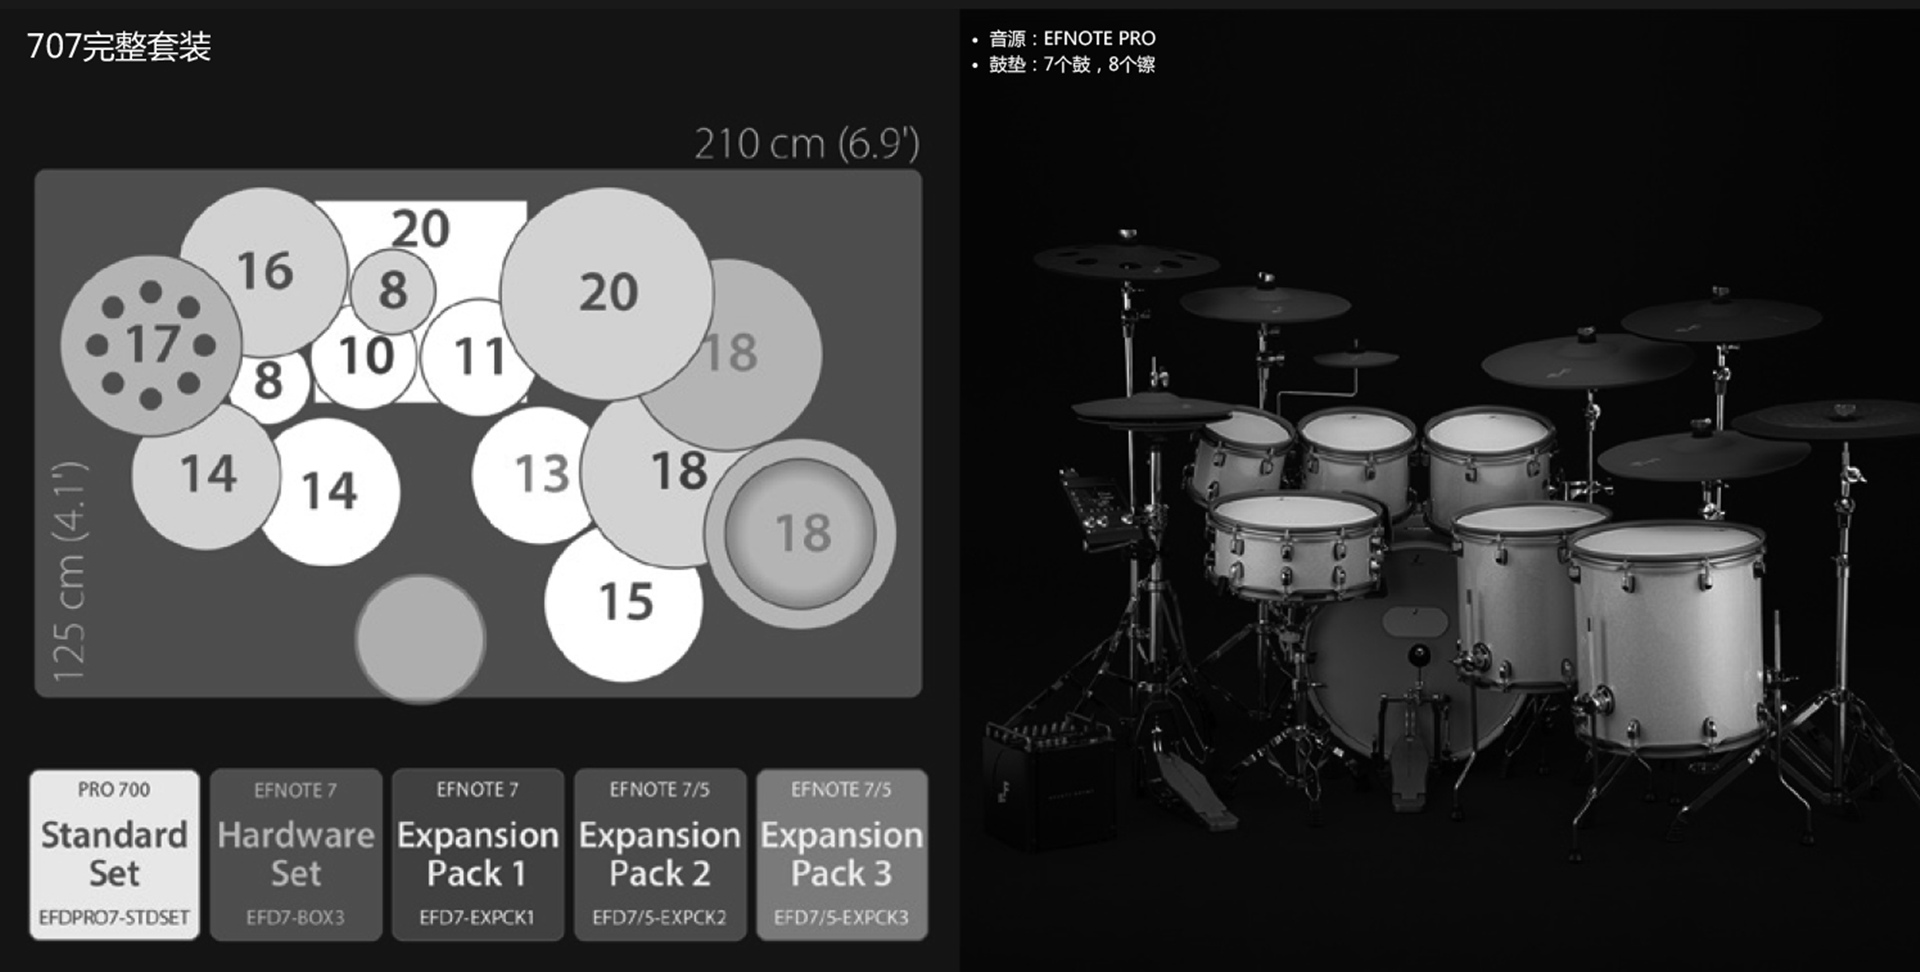 EFNOTE_PRO___The_Stage_Drums_(1)_10.jpg